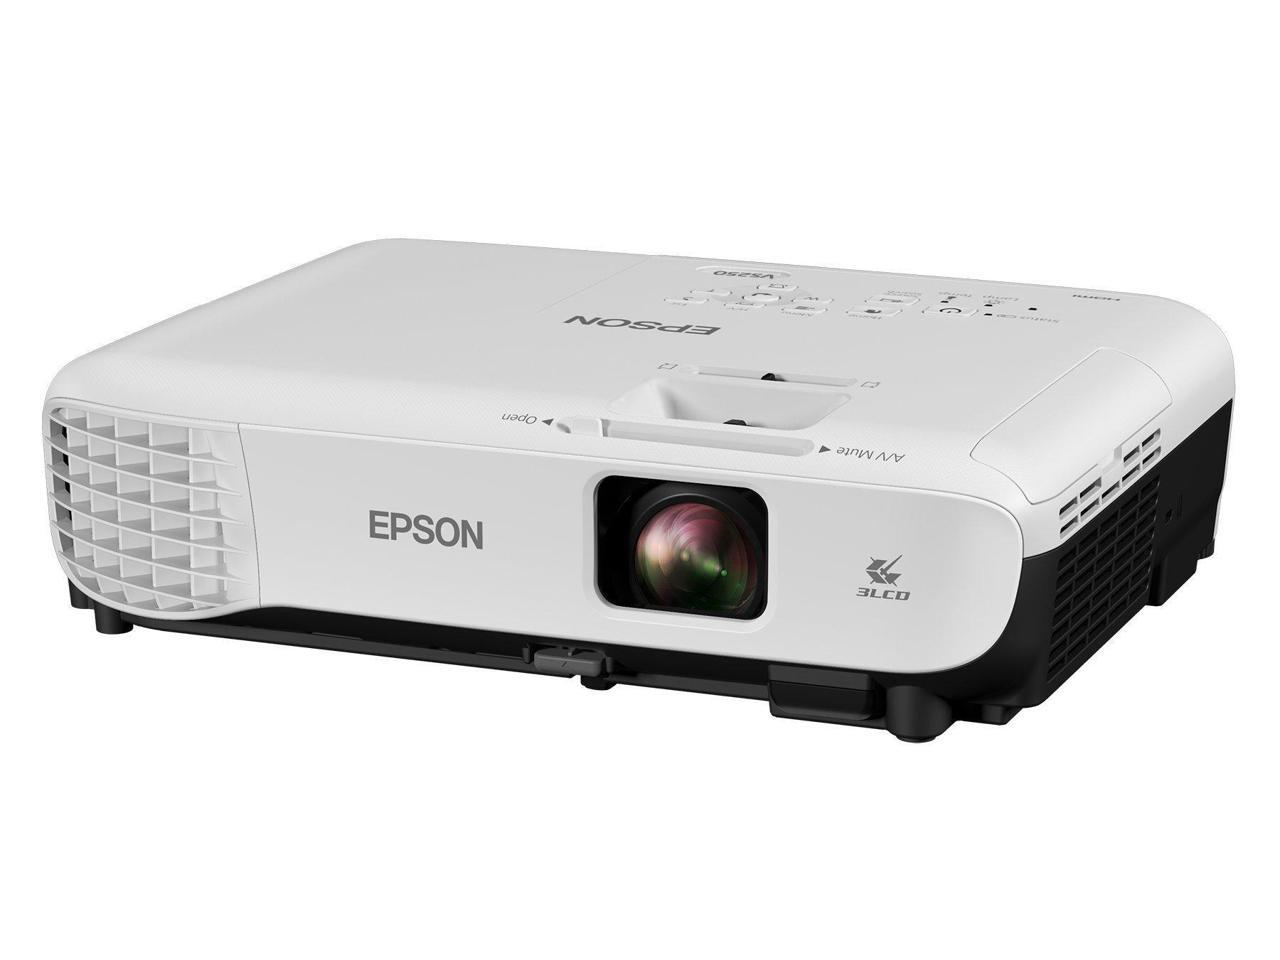 Epson VS250 SVGA 3LCD 800 x 600 3200 lumens Projector 10343935785 | eBay